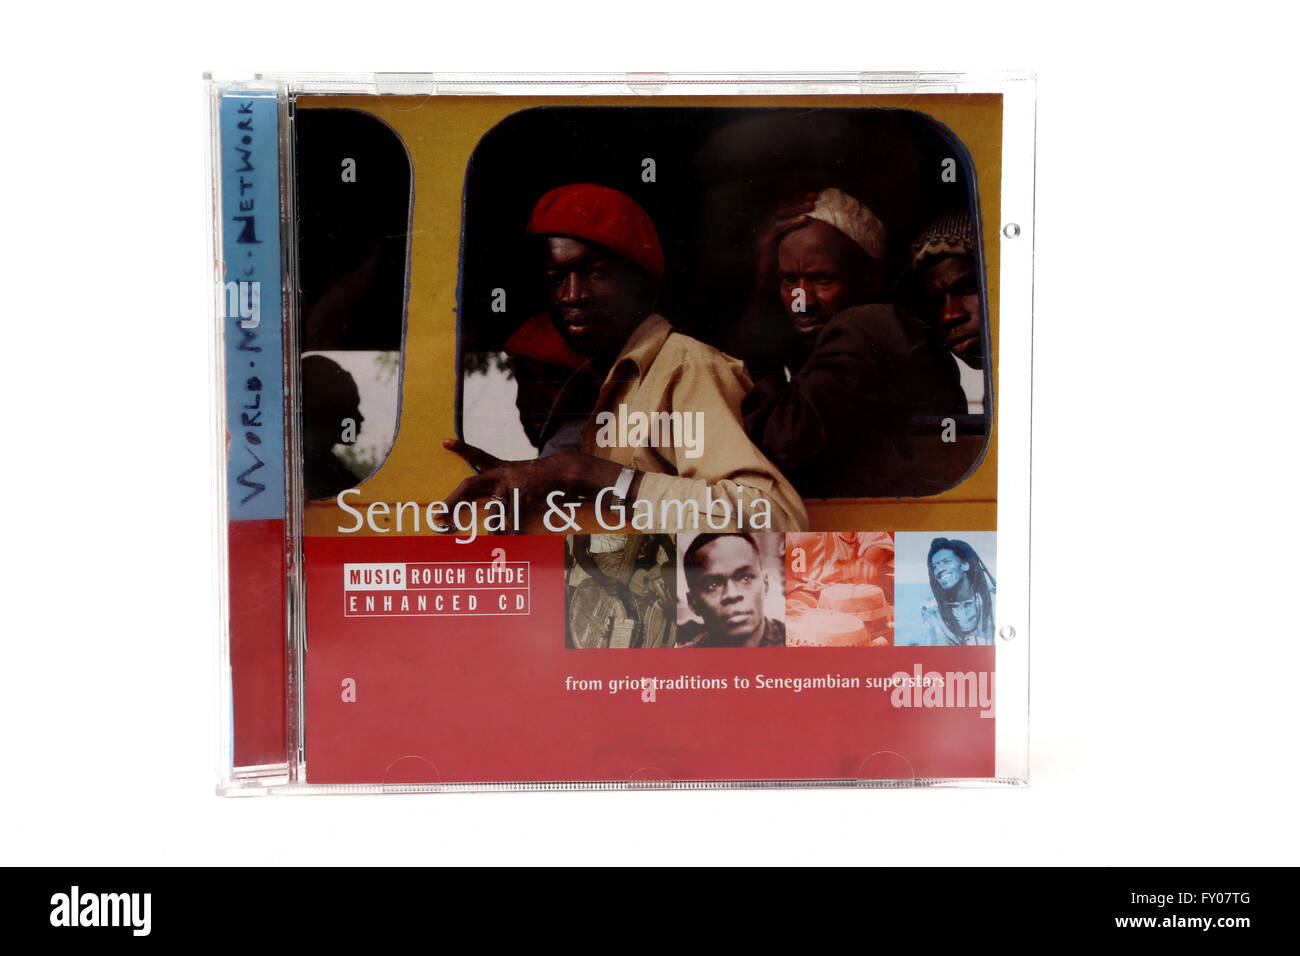 World Music Network Senegal And Gambia Music CD Stock Photo